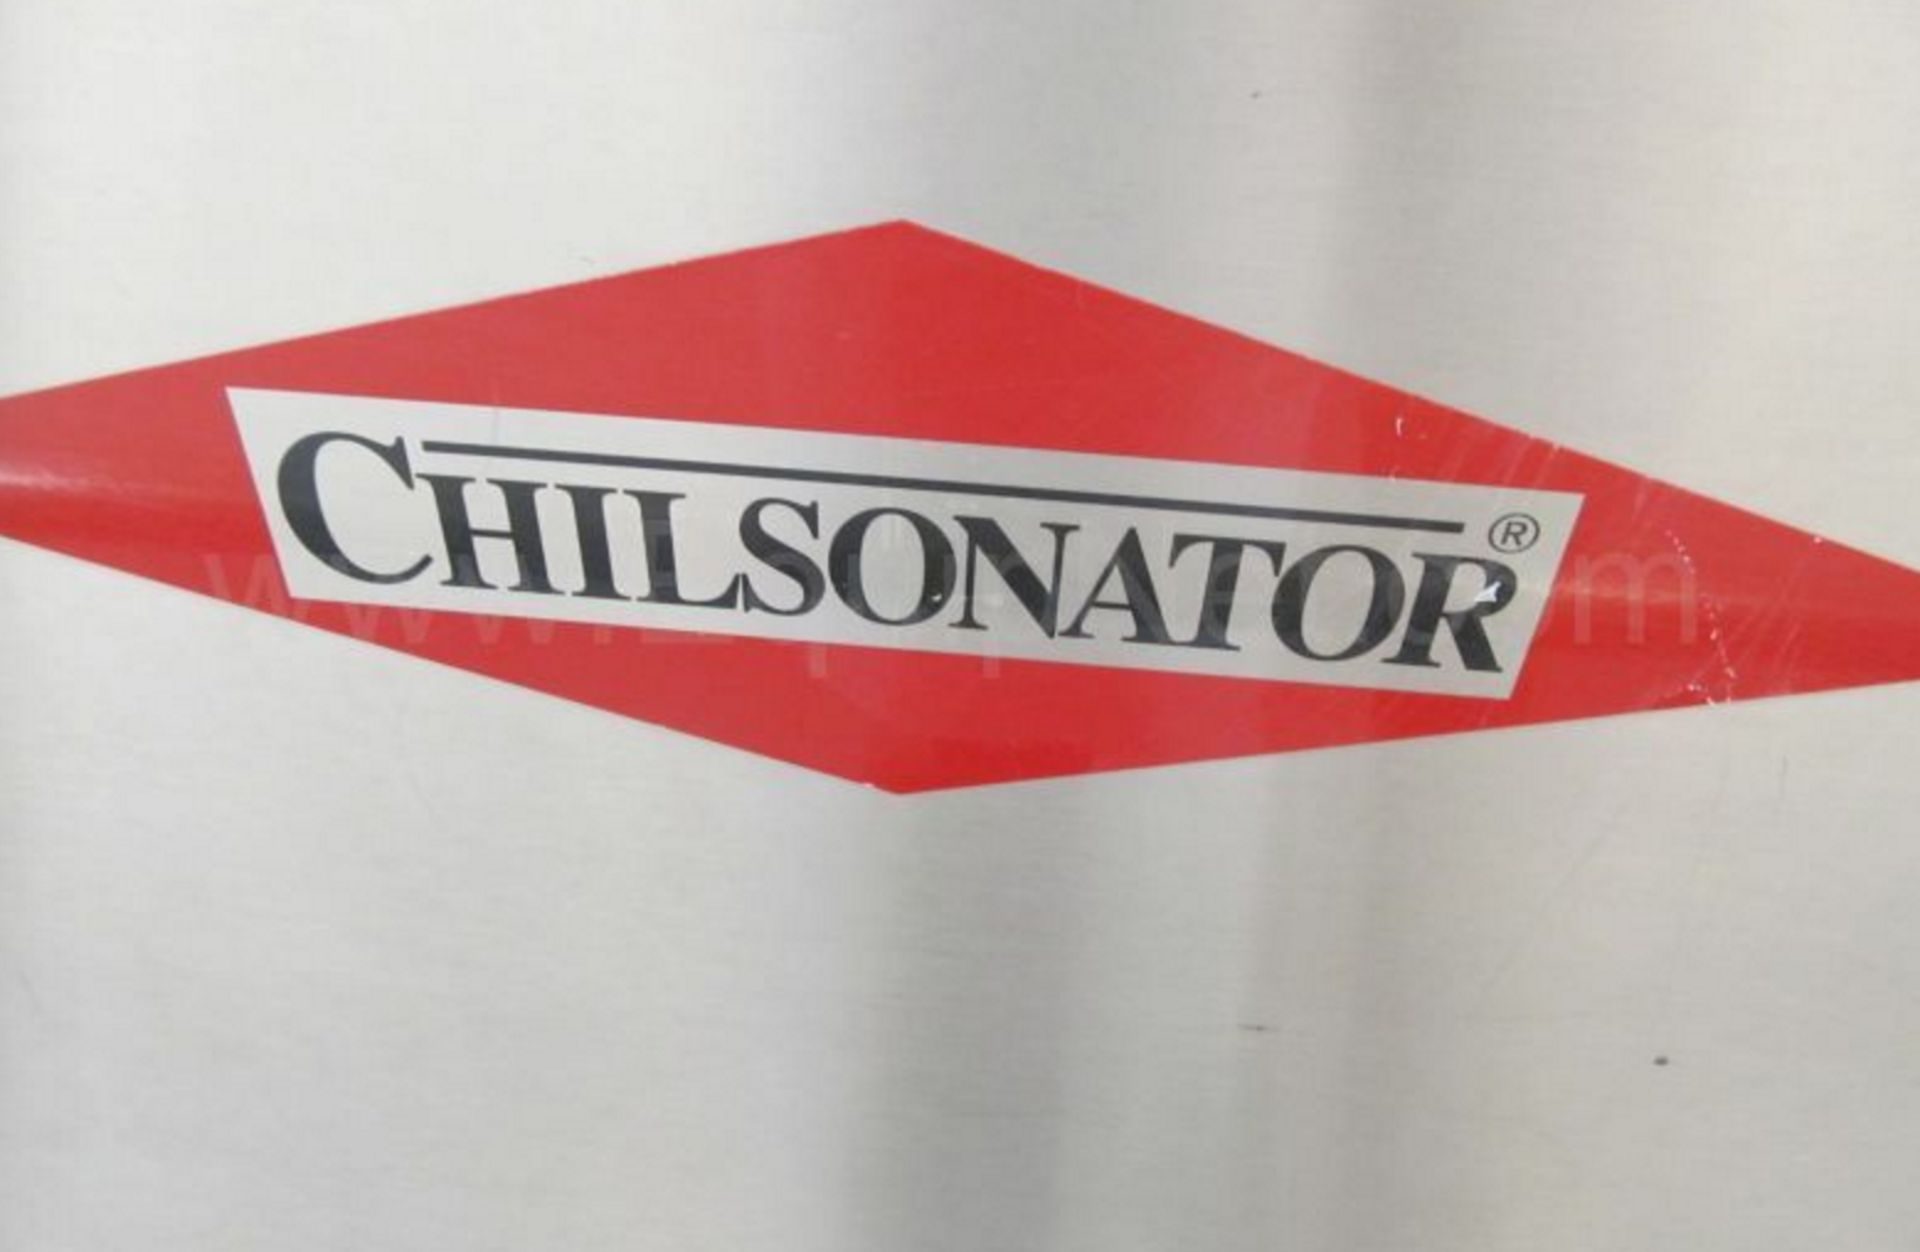 Chilsonator System - Image 65 of 65